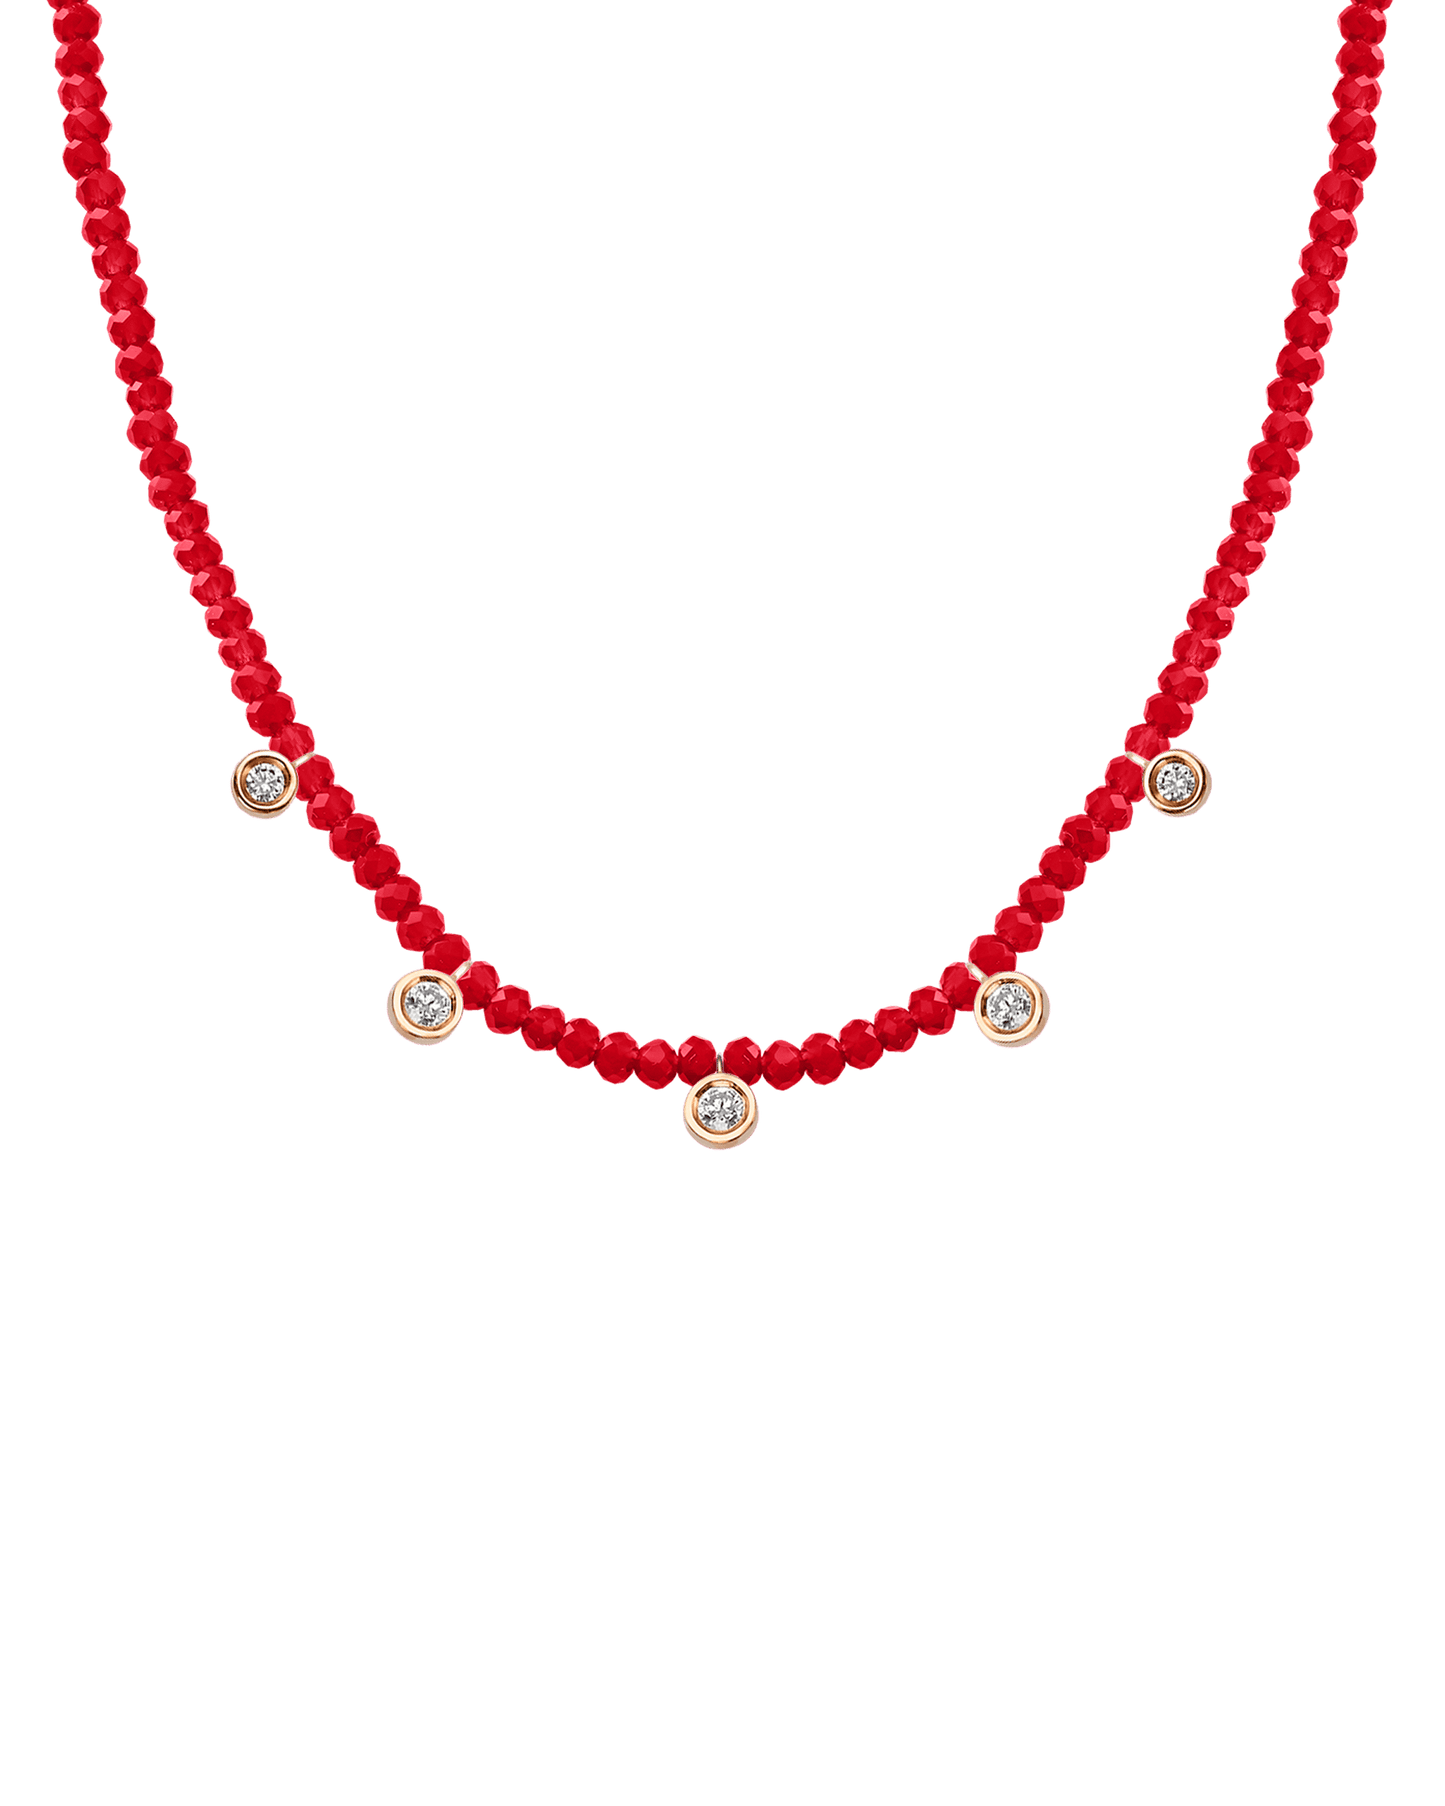 Turquoise Gemstone & Five diamonds Necklace - 14K White Gold